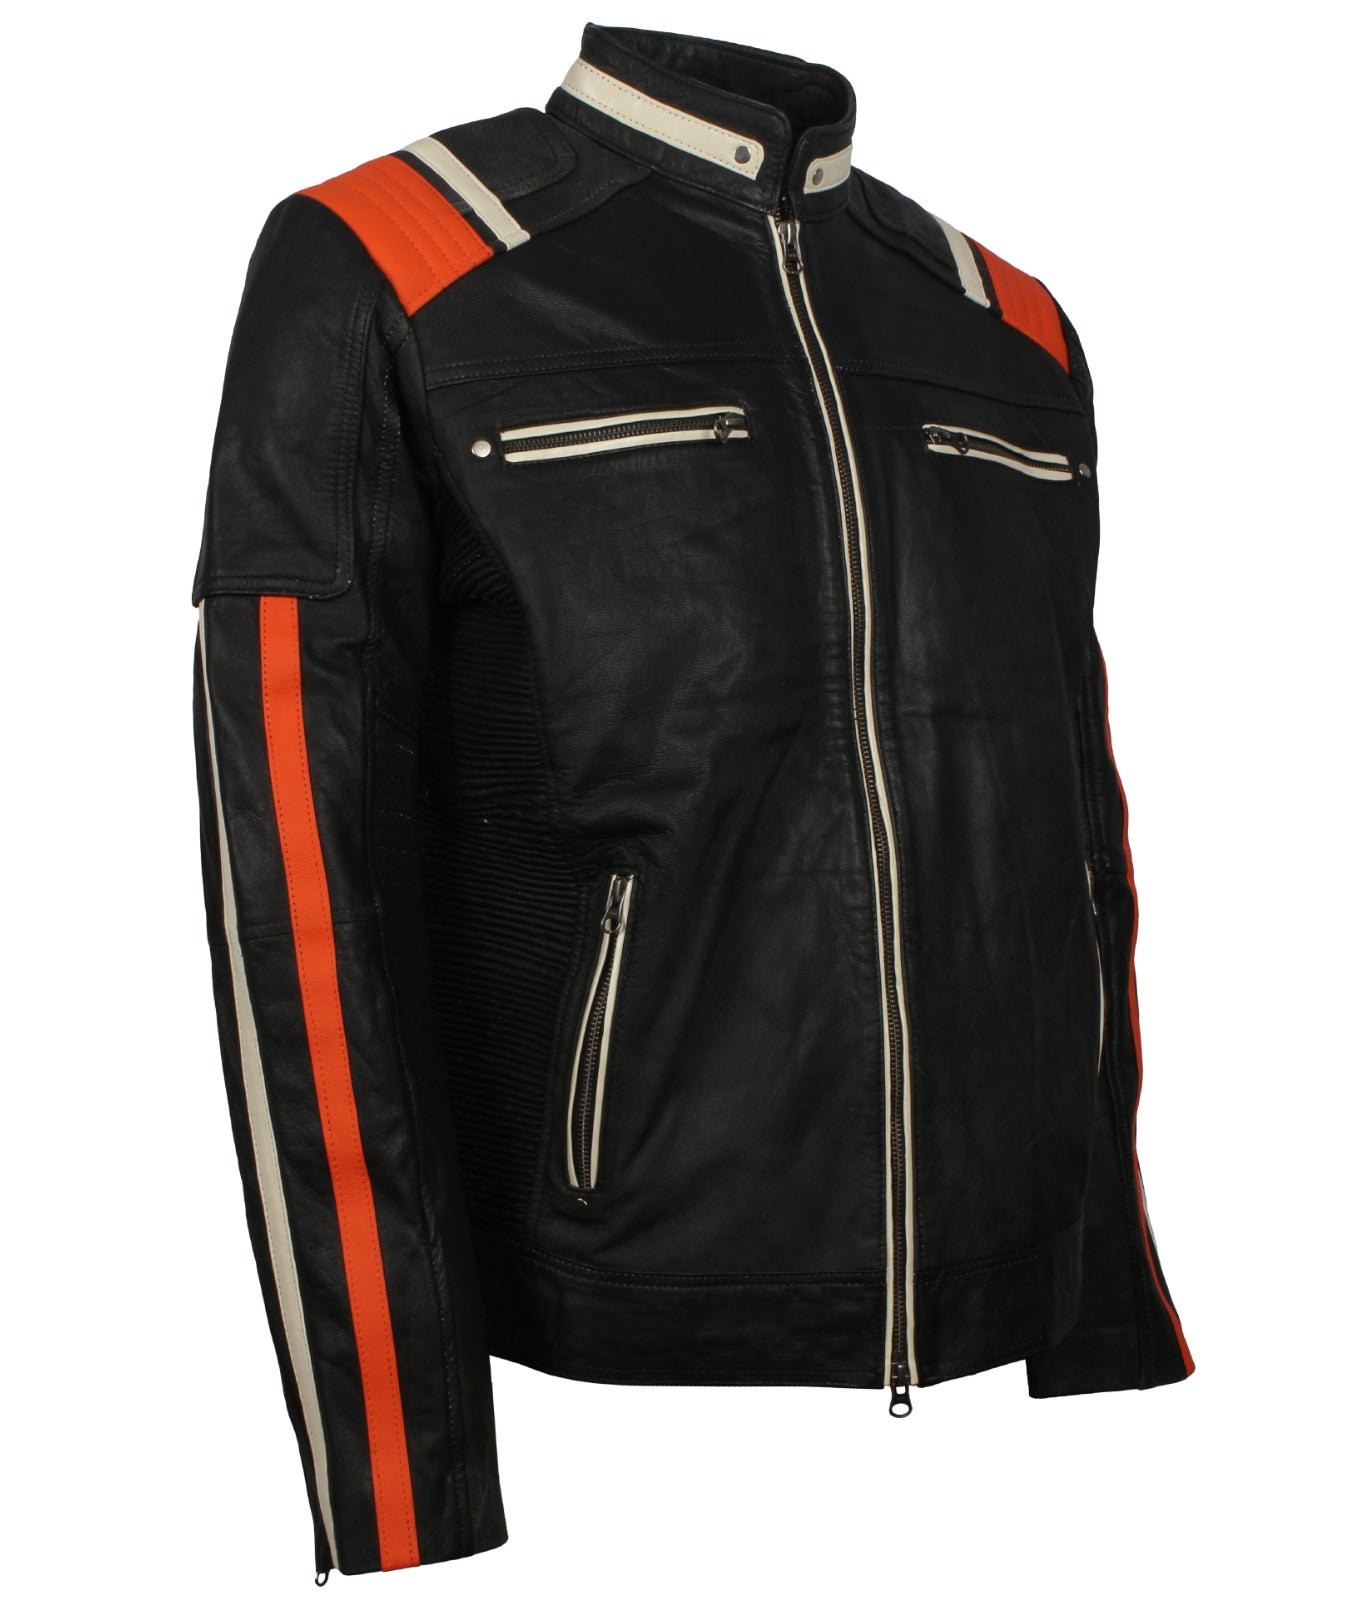 Mens Vintage Motorcycle Jacket With Stripes